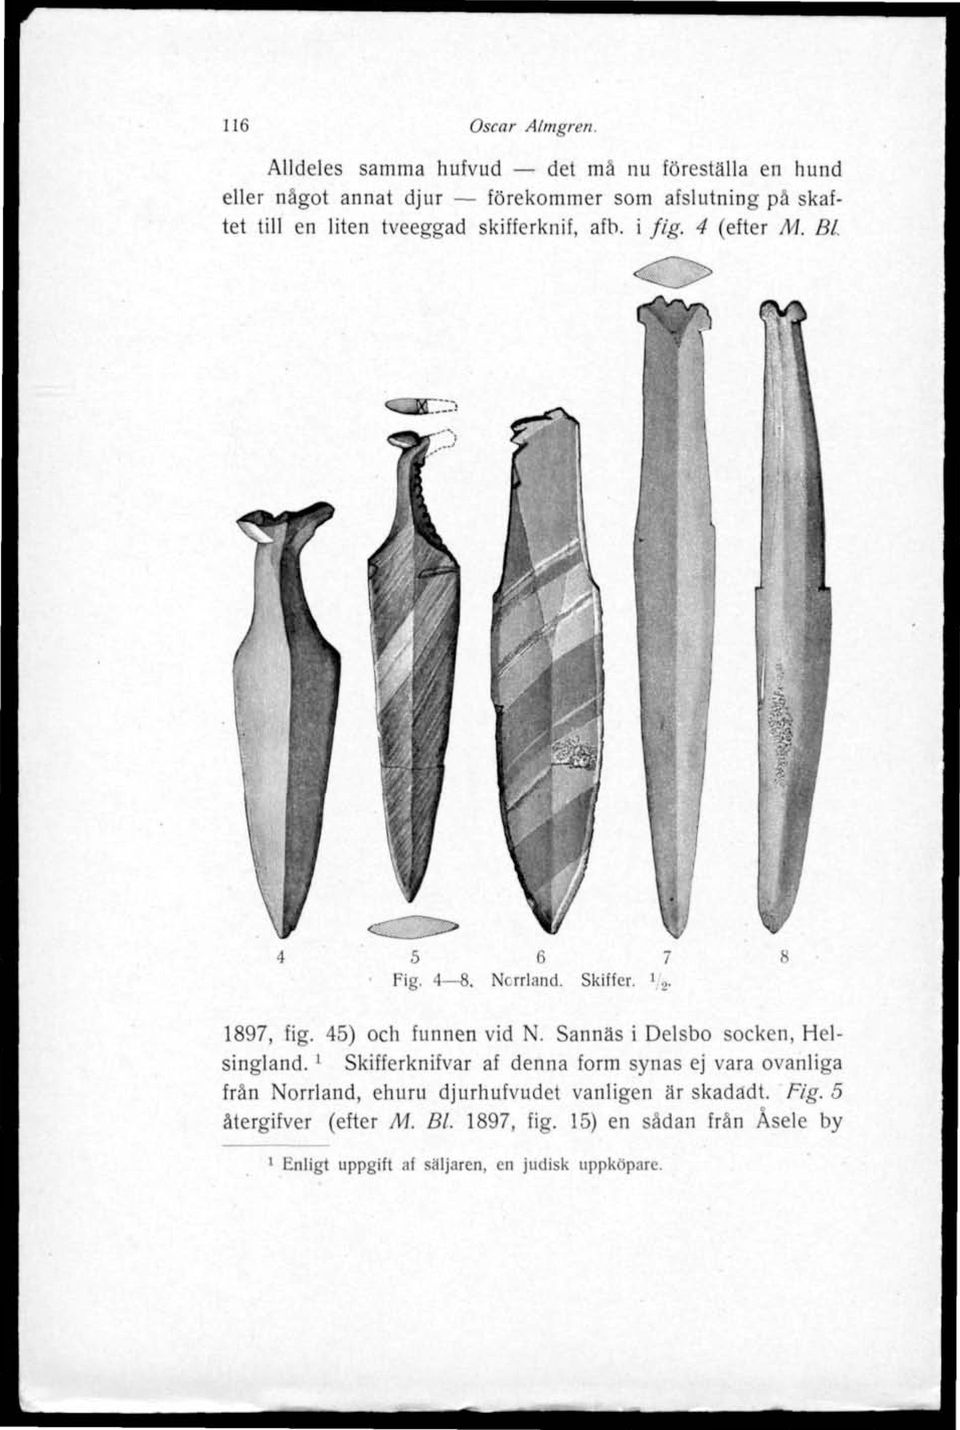 skifferknif, afb. i fig. 4 (efter M. Bl.! m 5 6 7 Fig. 4 8. Ncrrland. Skiffer. '.,. 1897, fig. 45) och funnen vid N.